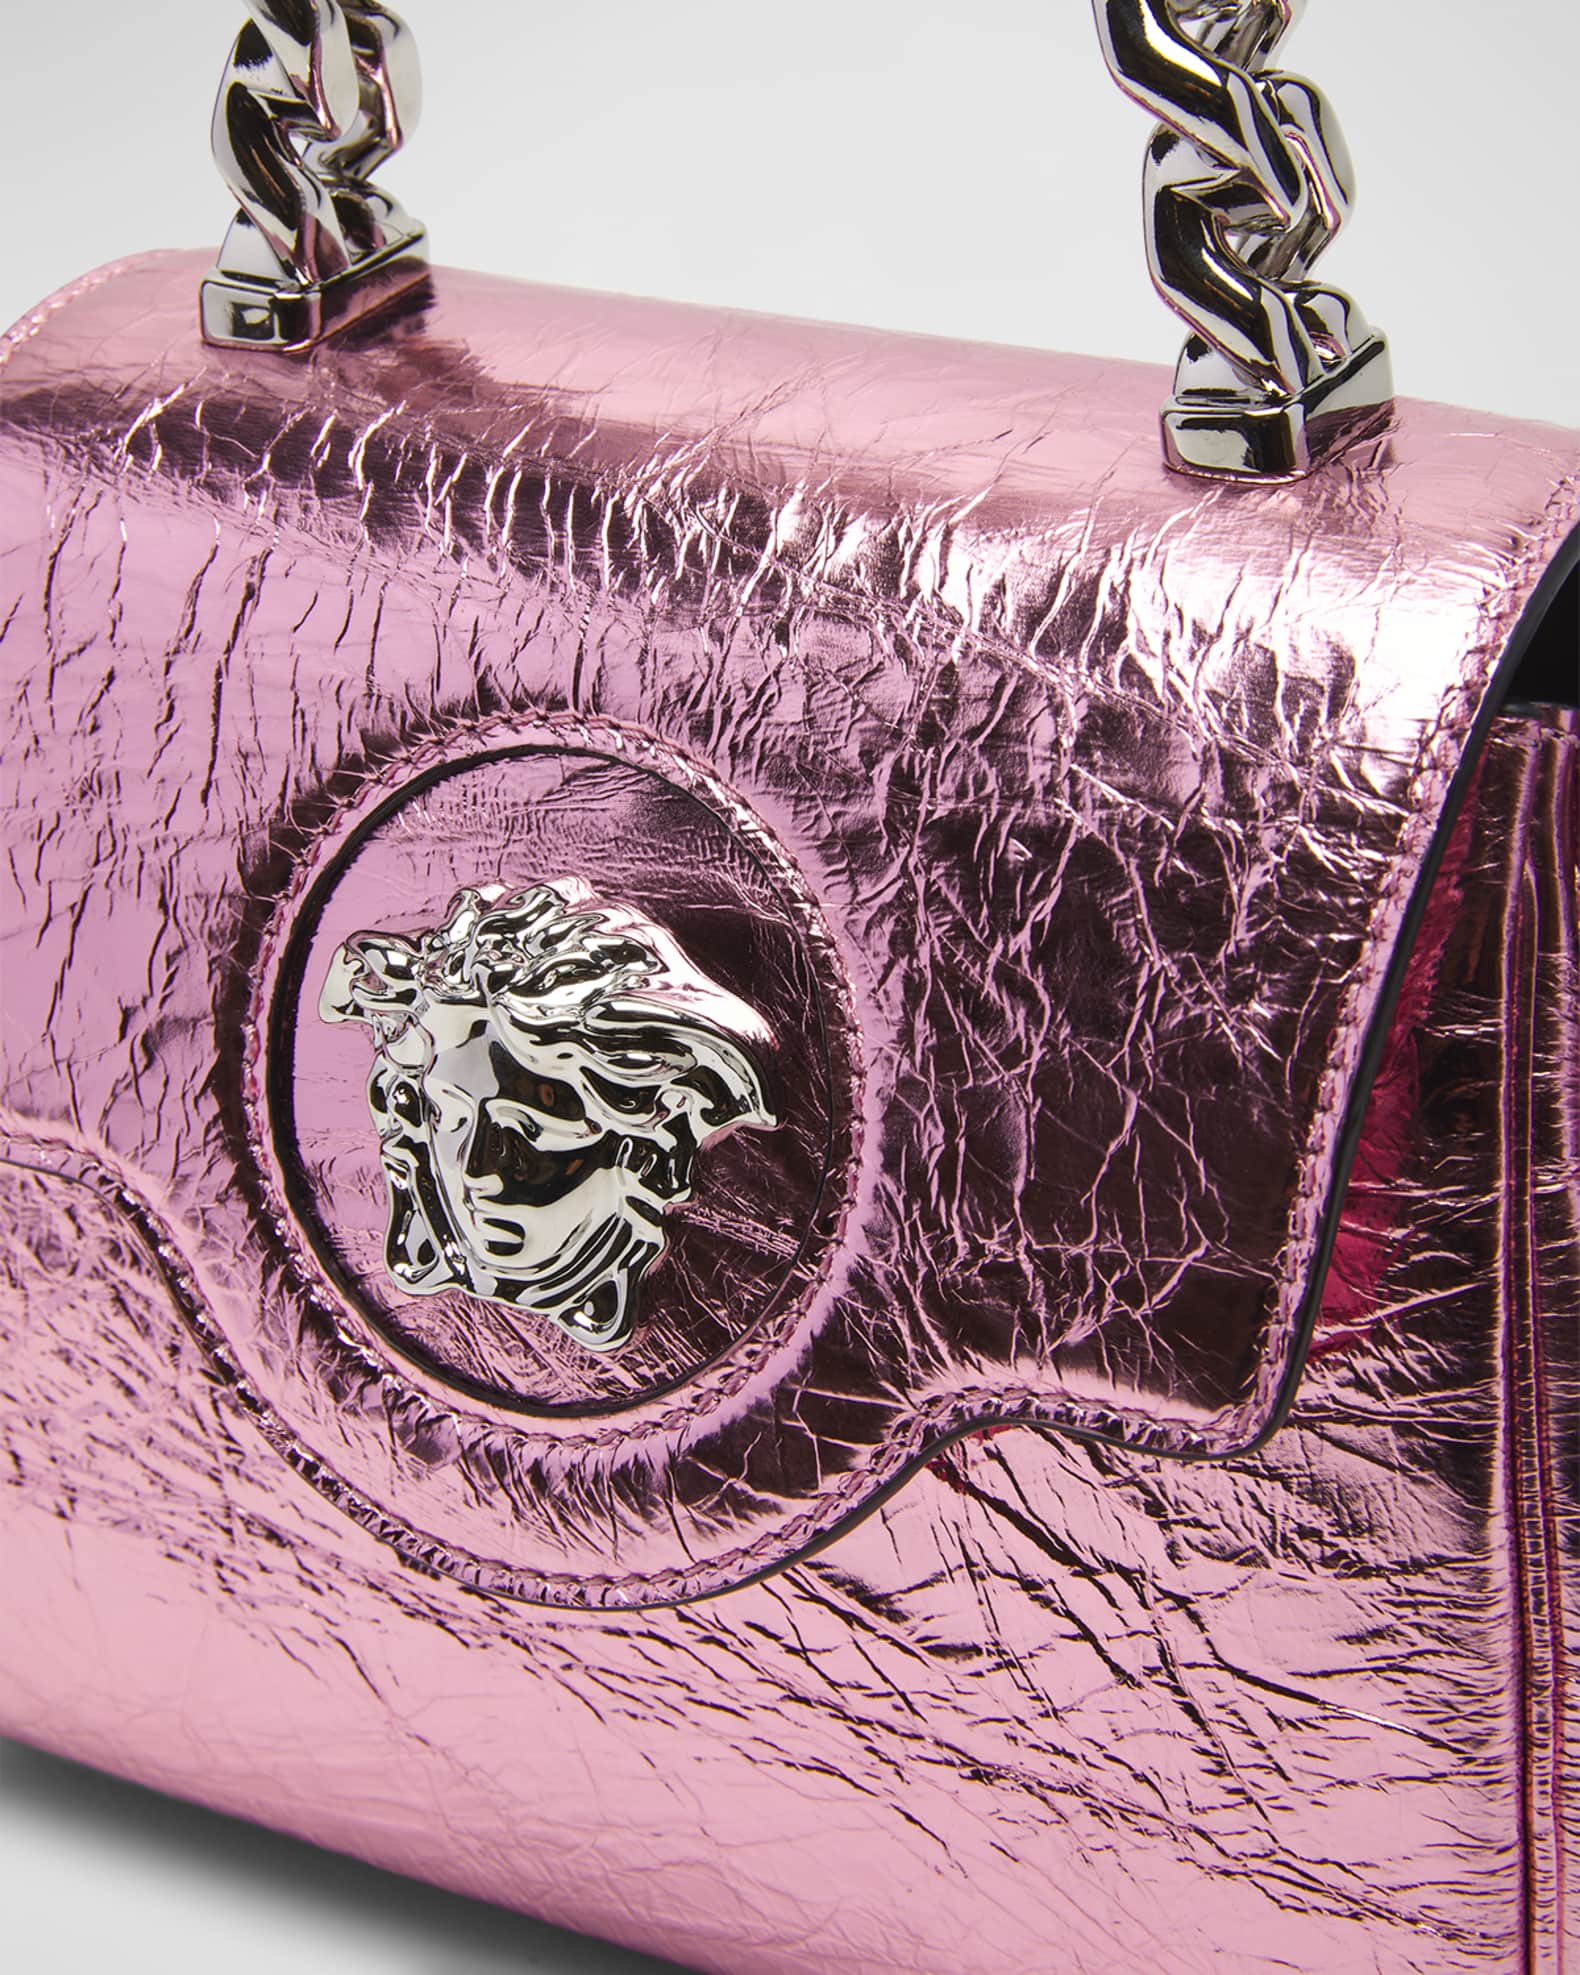 Versace Woman's La Medusa Turquoise Leather Handbag